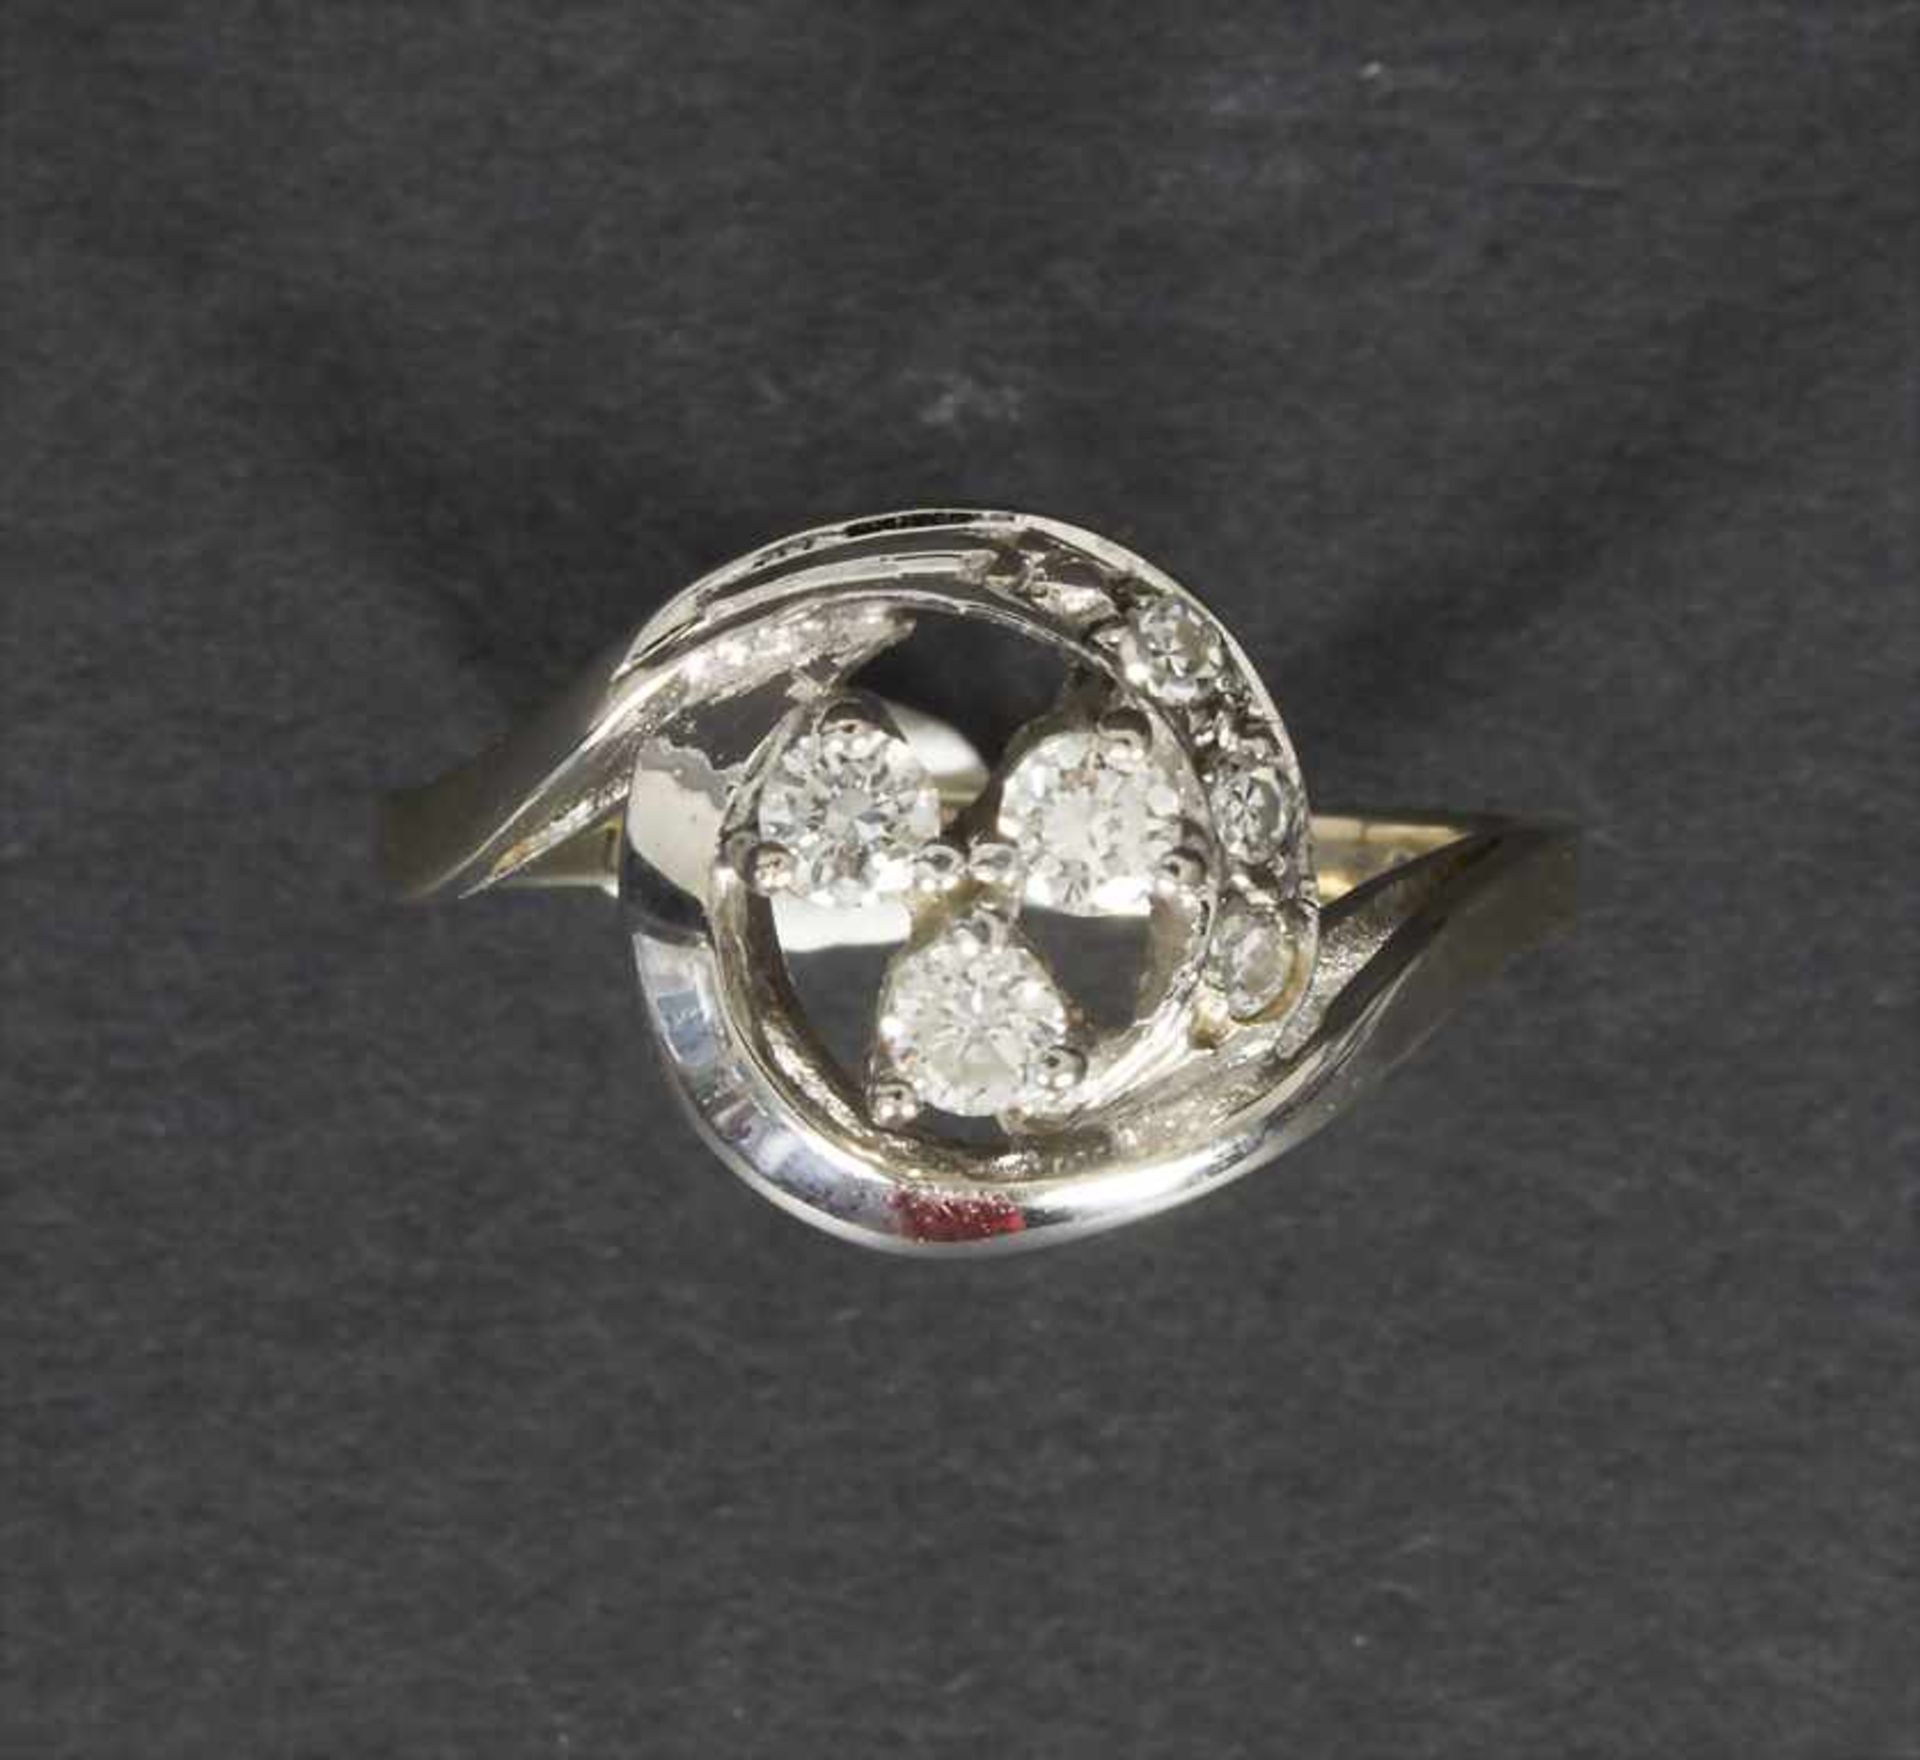 Damenring mit Diamanten / A ladies ring with diamondsMaterial: WG 585/000, Diamanten zus. ca. 0,3